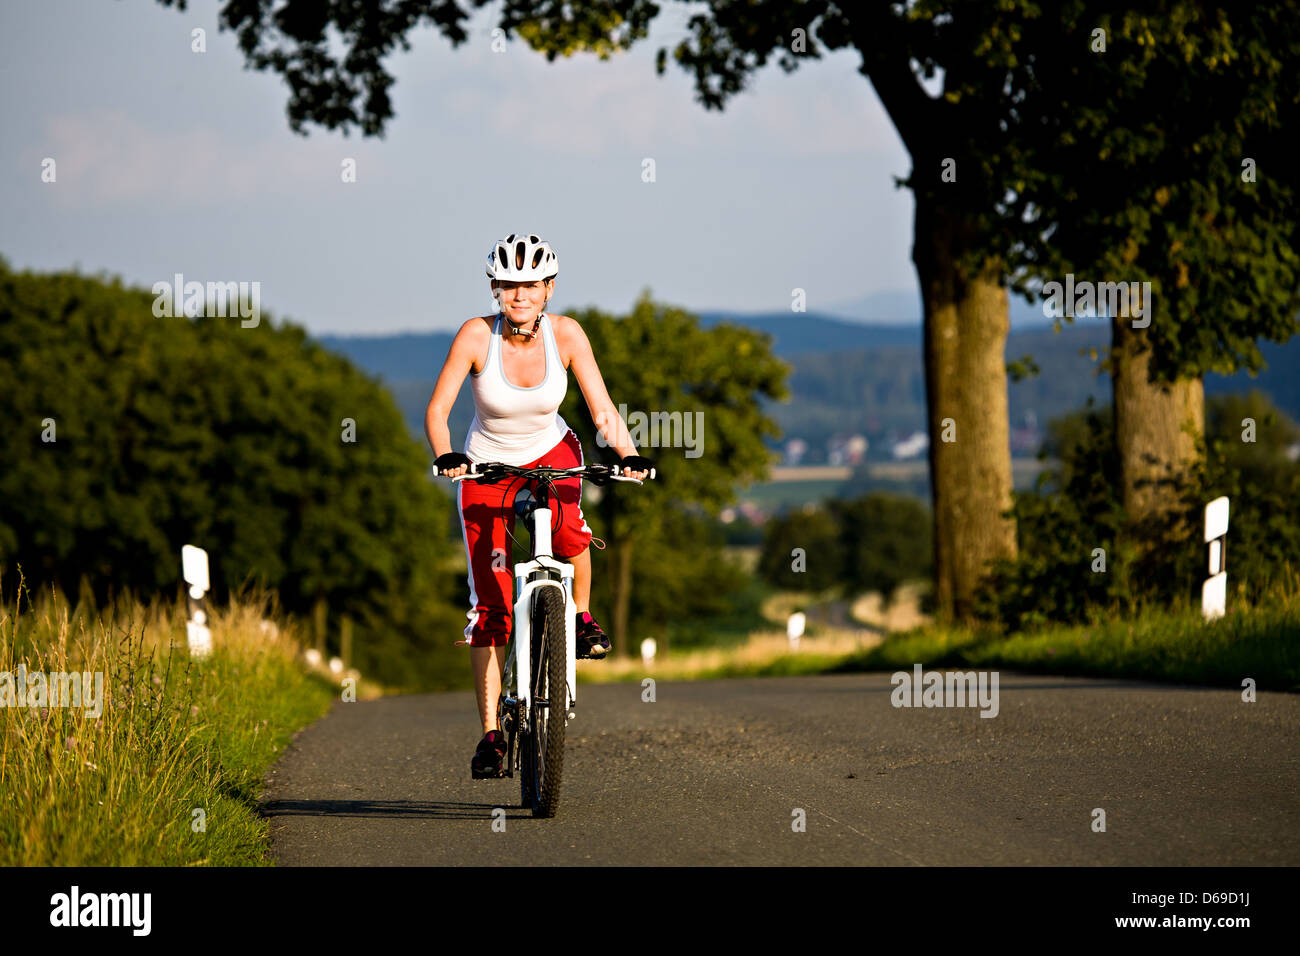 cycling woman Stock Photo